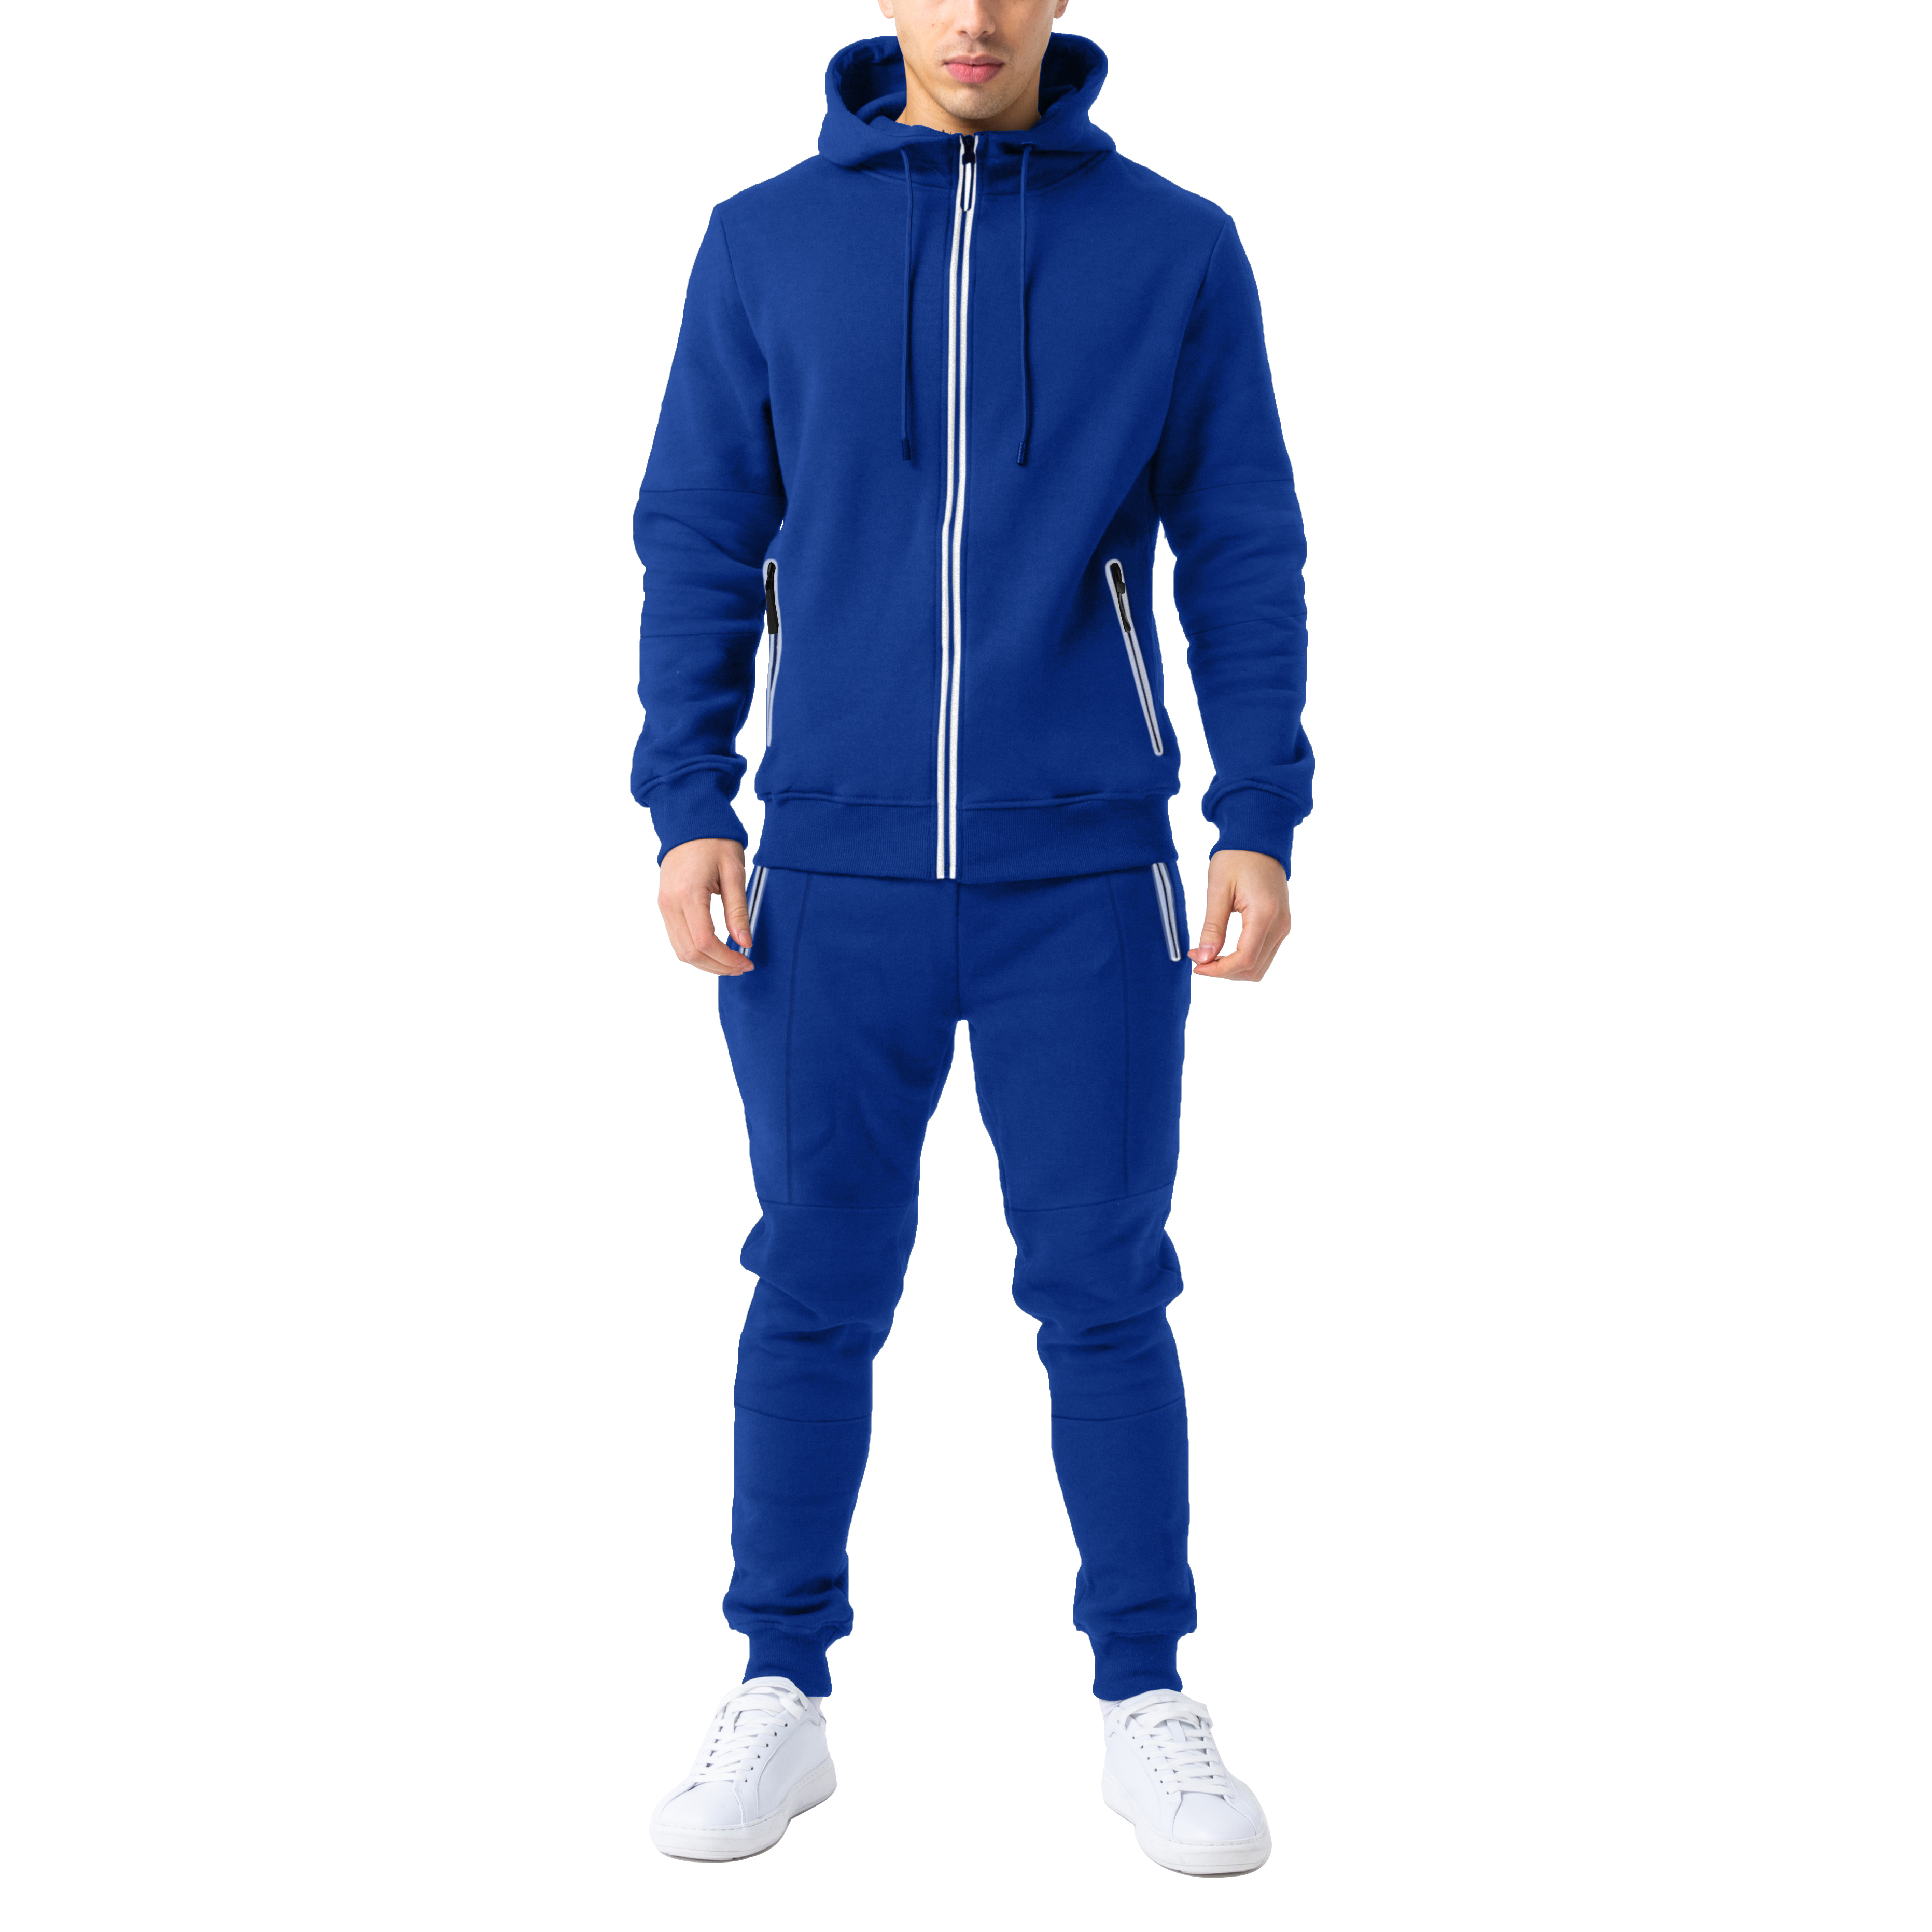 Men's Stylish Slim Fitting Hoodie & Jogger Set - Blue, Large